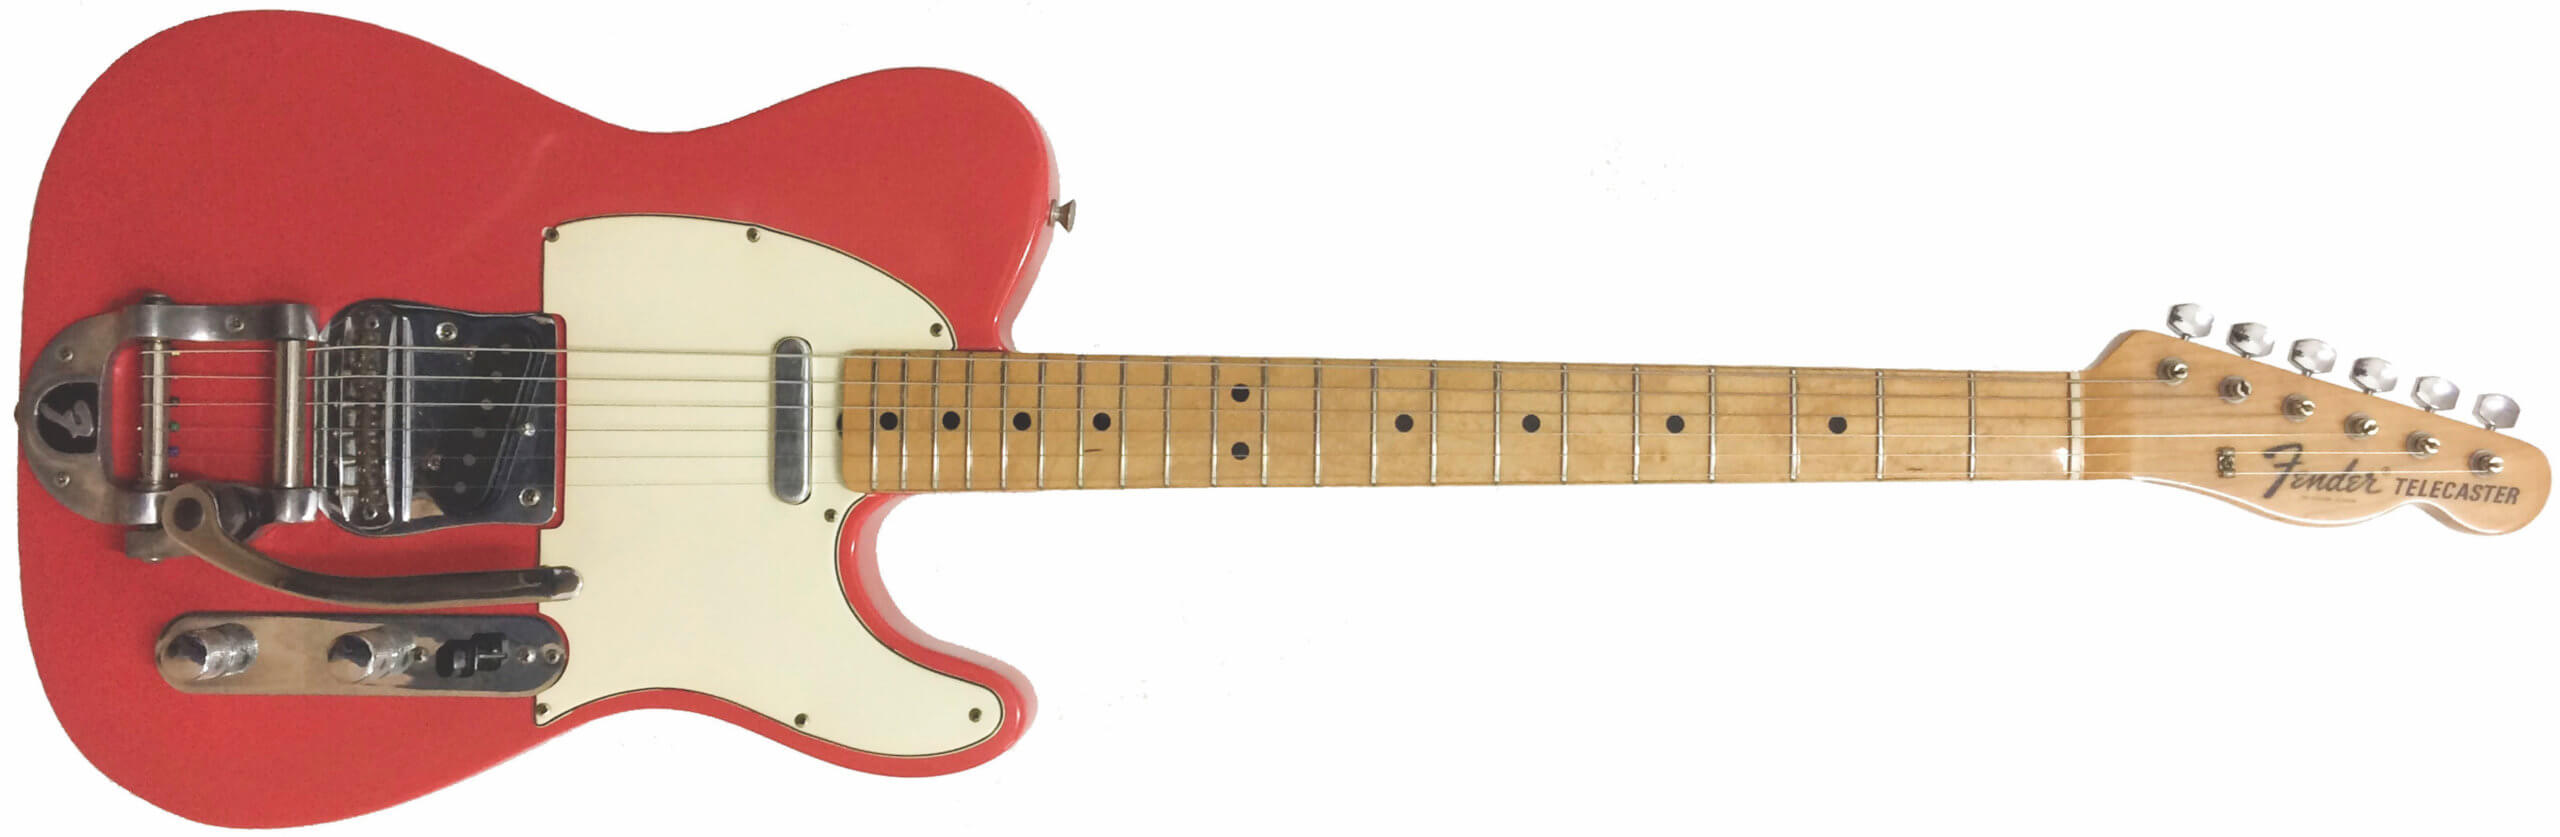 FLASHBACK: 1968 Fender Telecaster in Fiesta Red